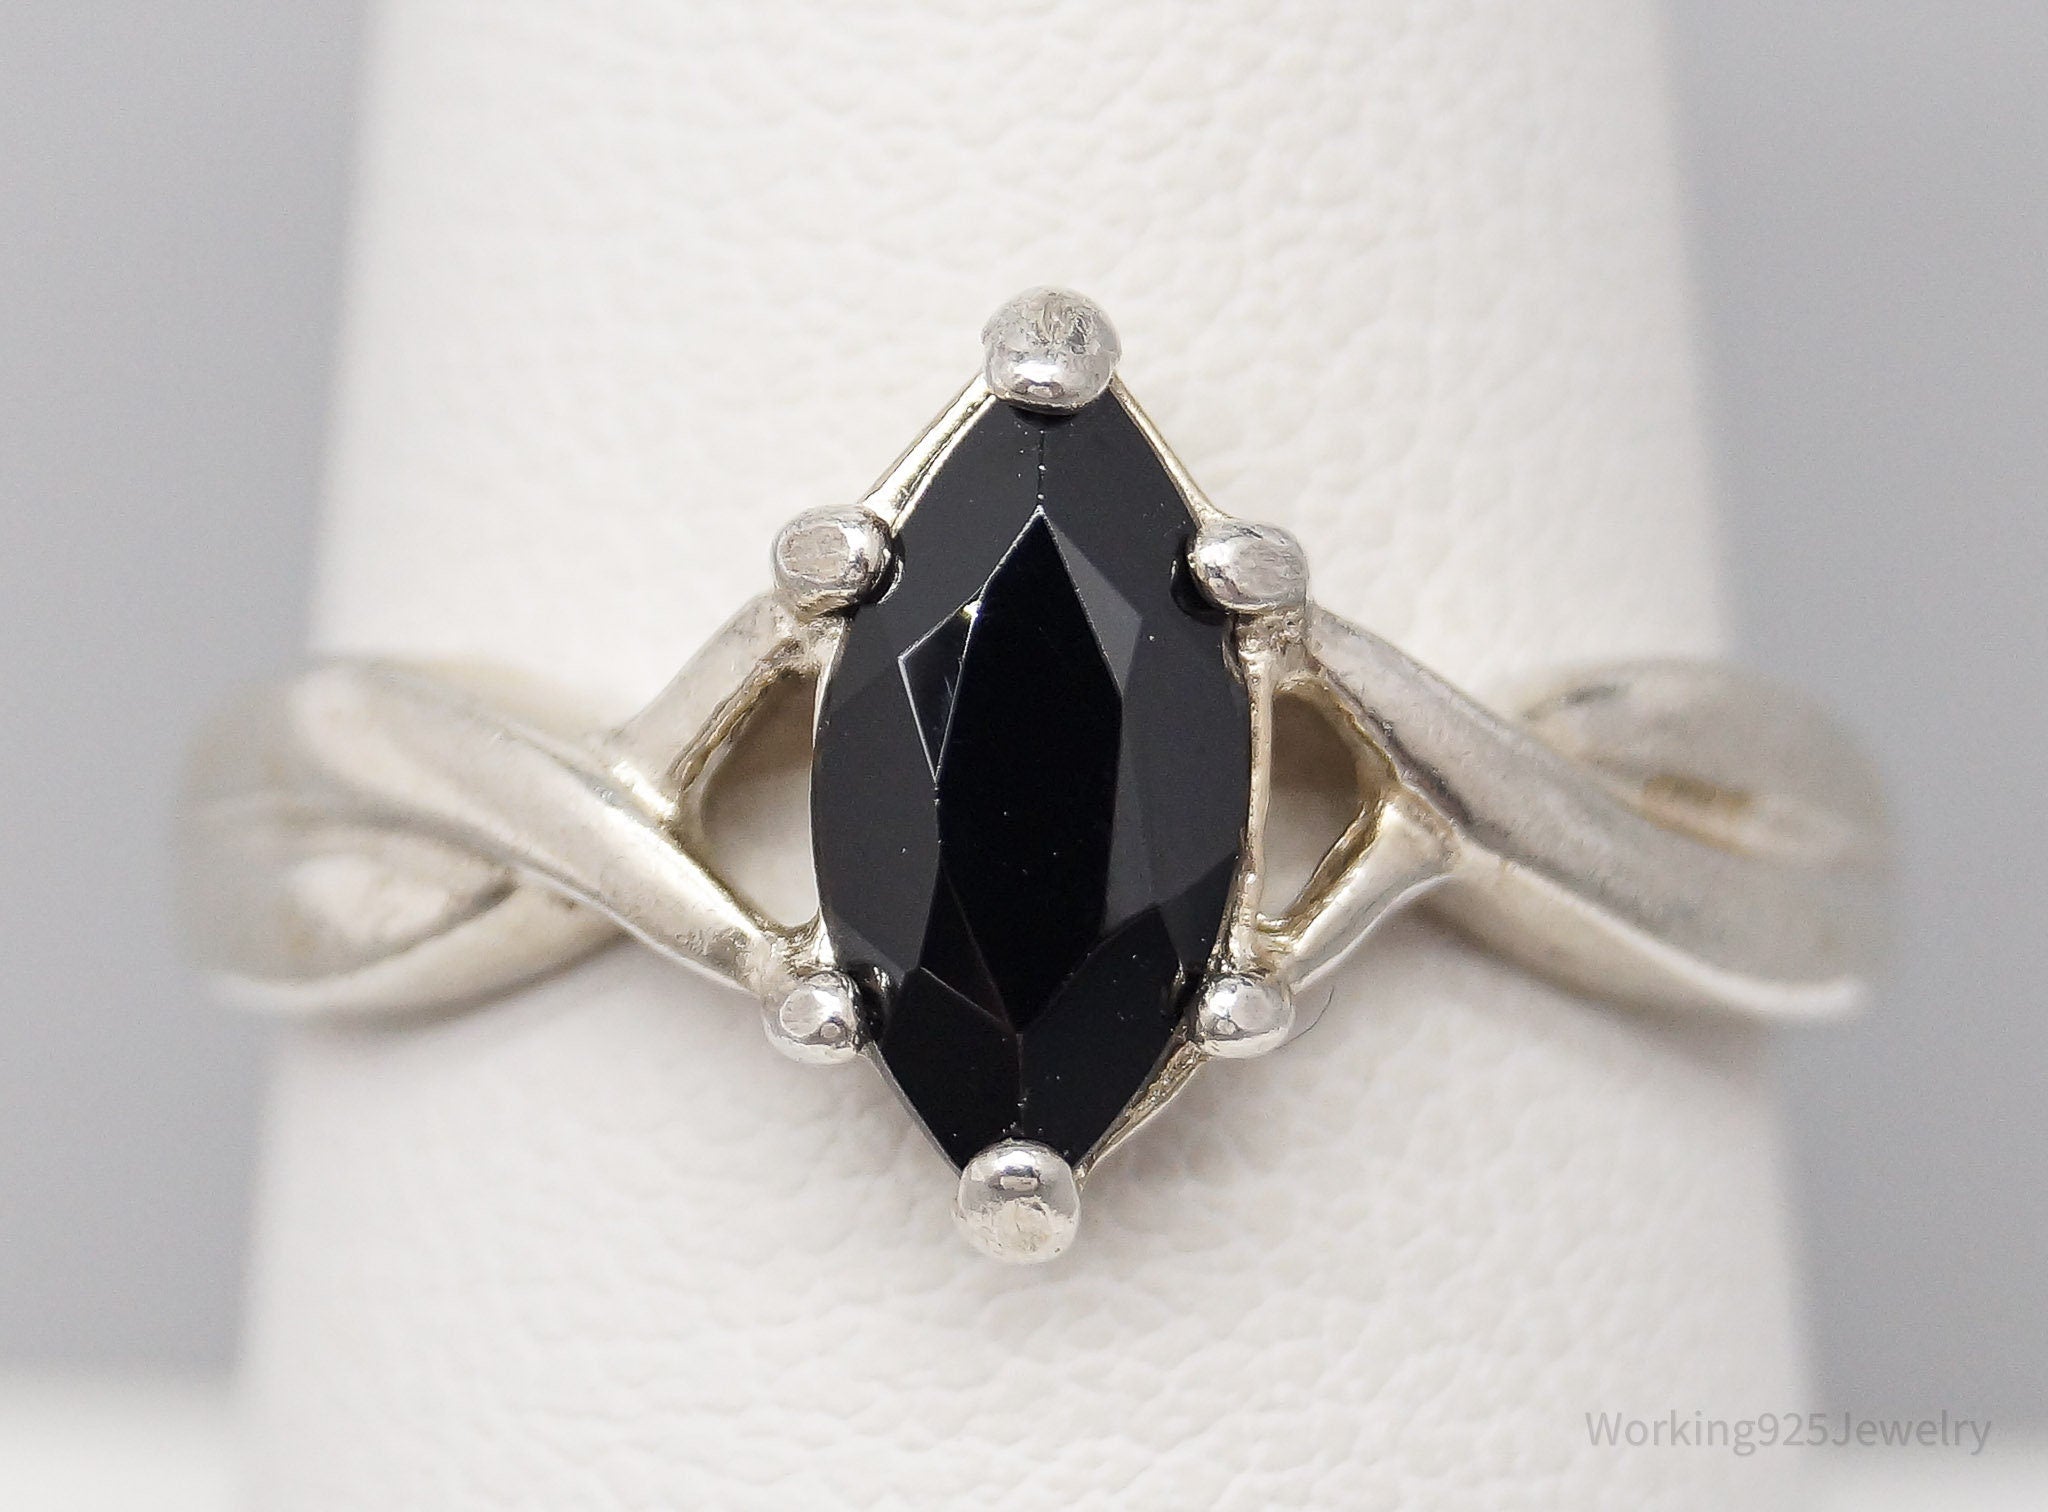 Vintage Avon Black Onyx Sterling Silver Ring - Size 8